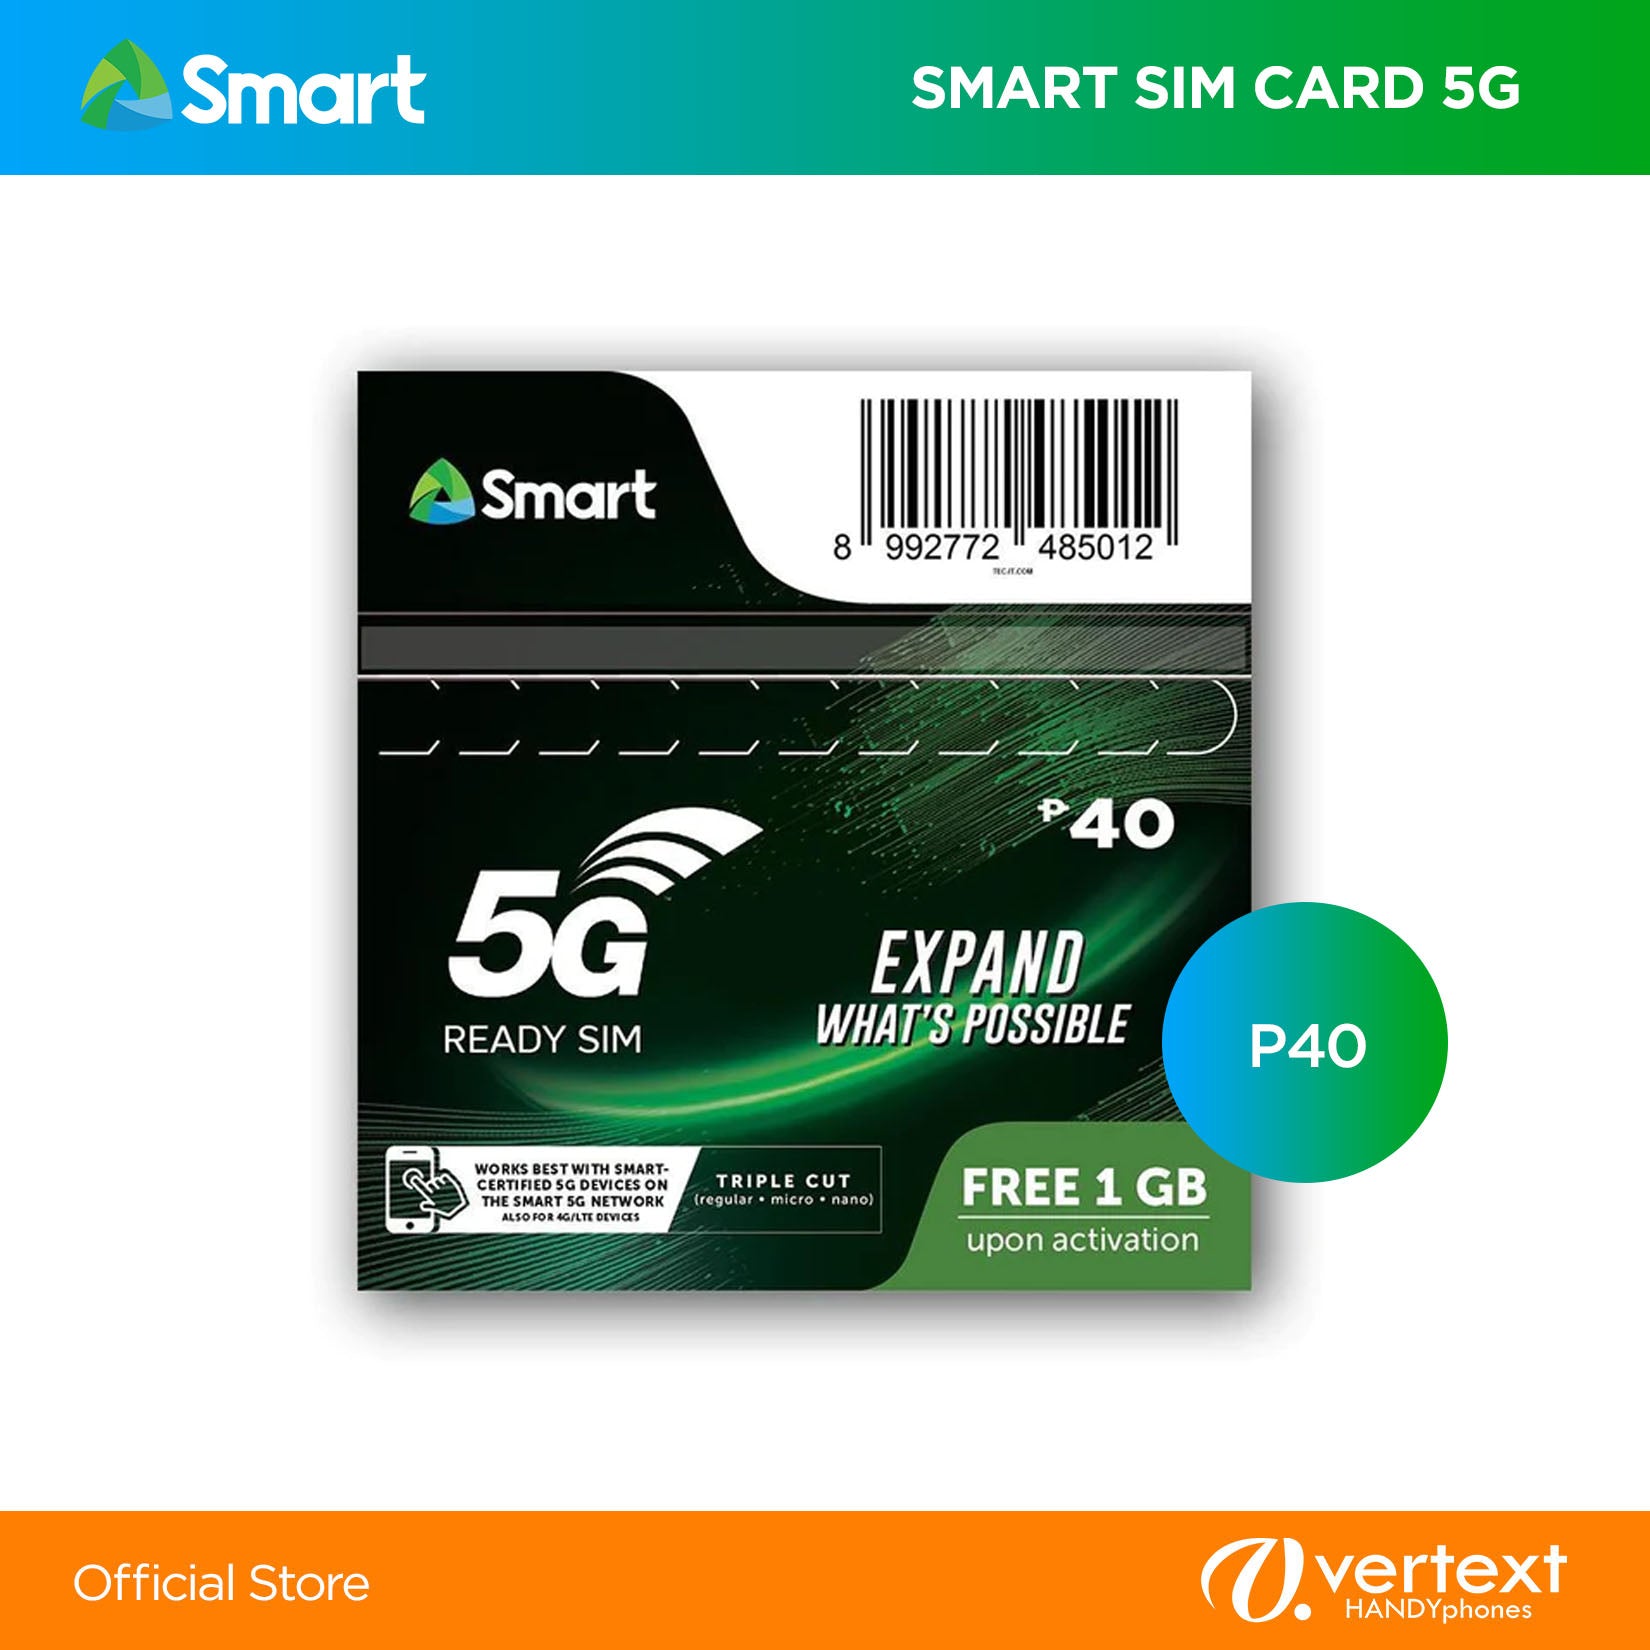 SMART SIM CARD 5G